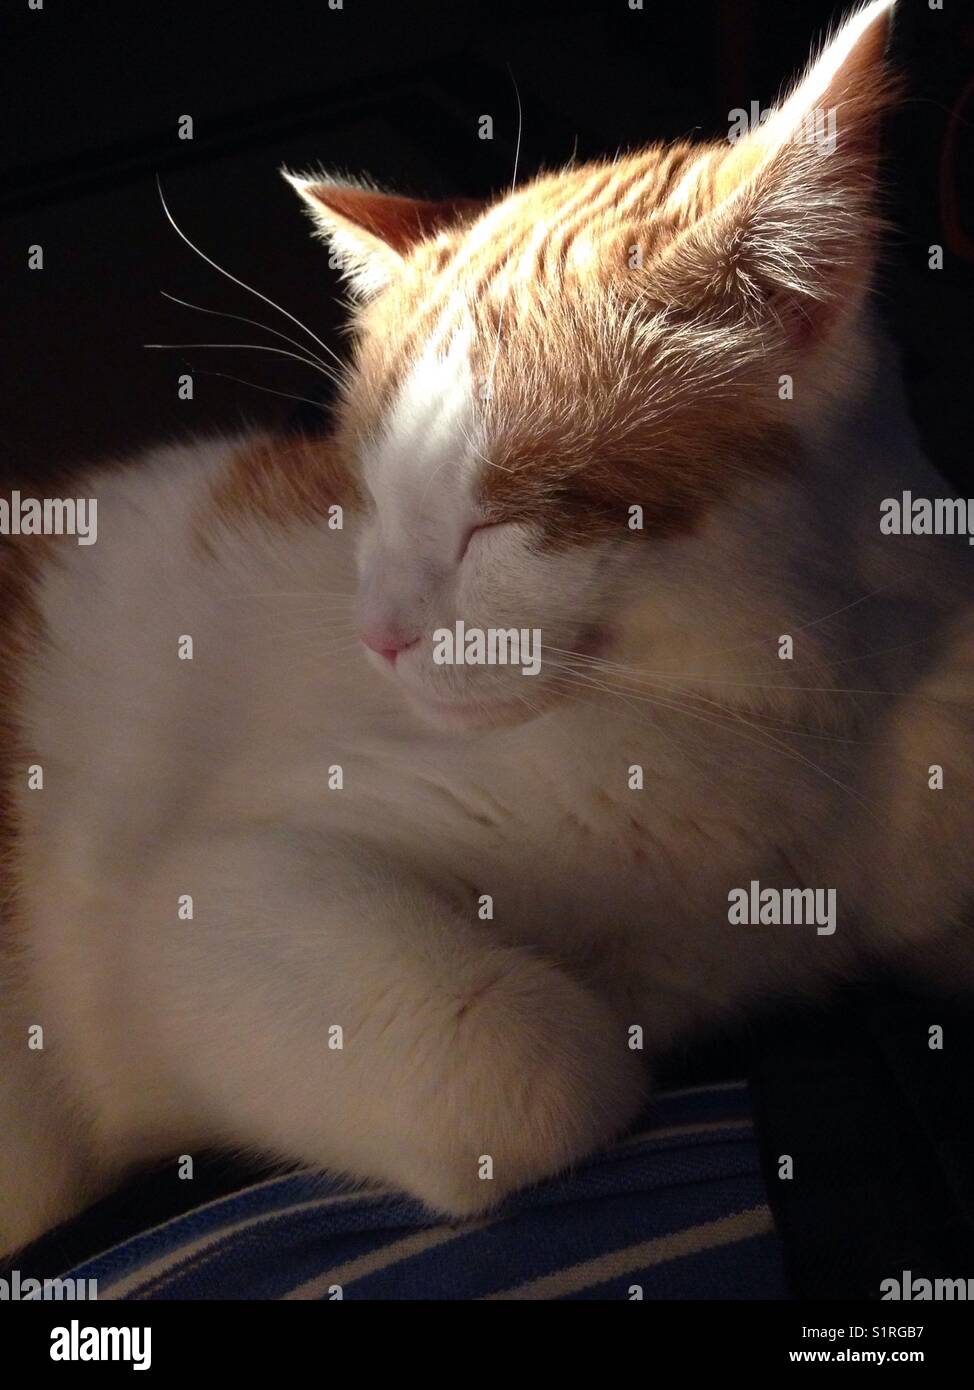 Sun setting on a cat falling asleep Stock Photo